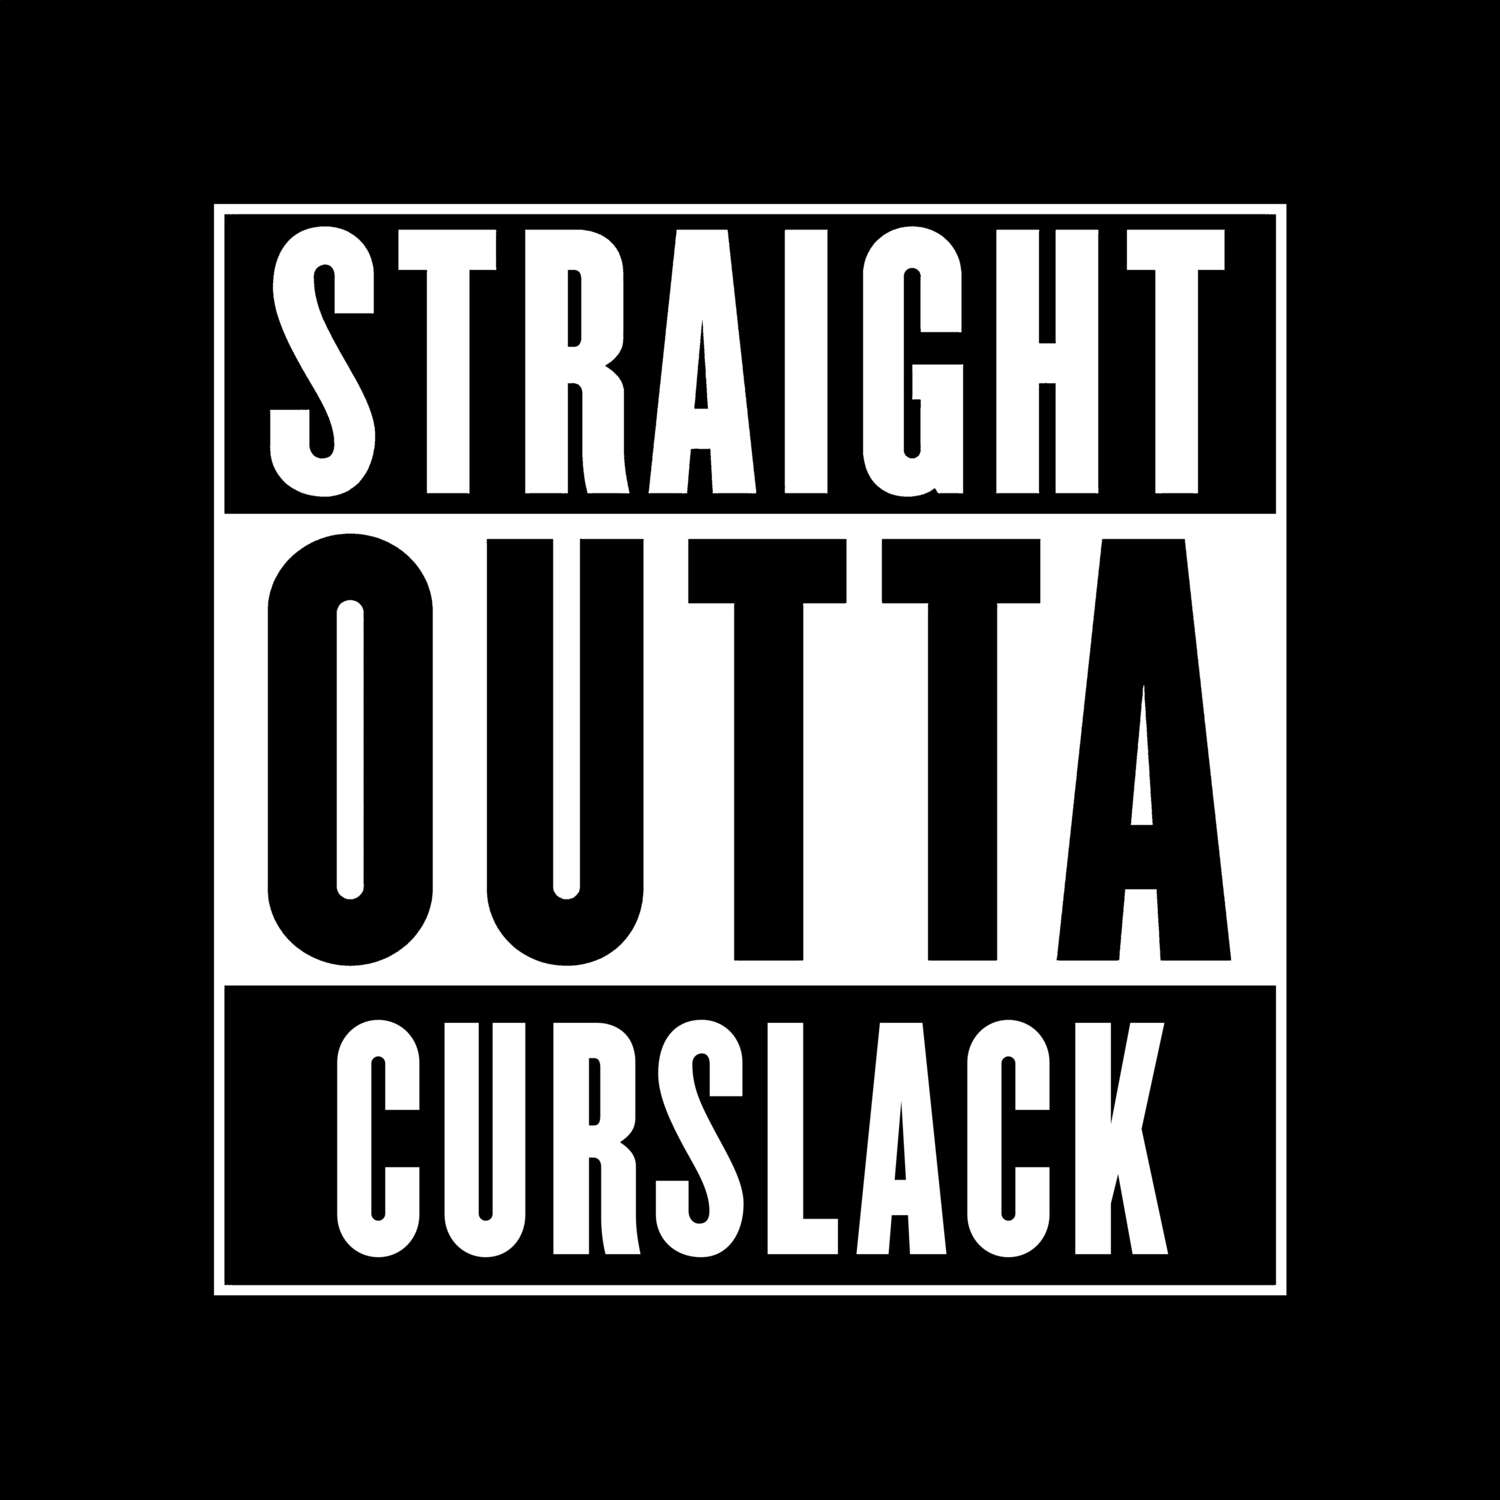 Curslack T-Shirt »Straight Outta«